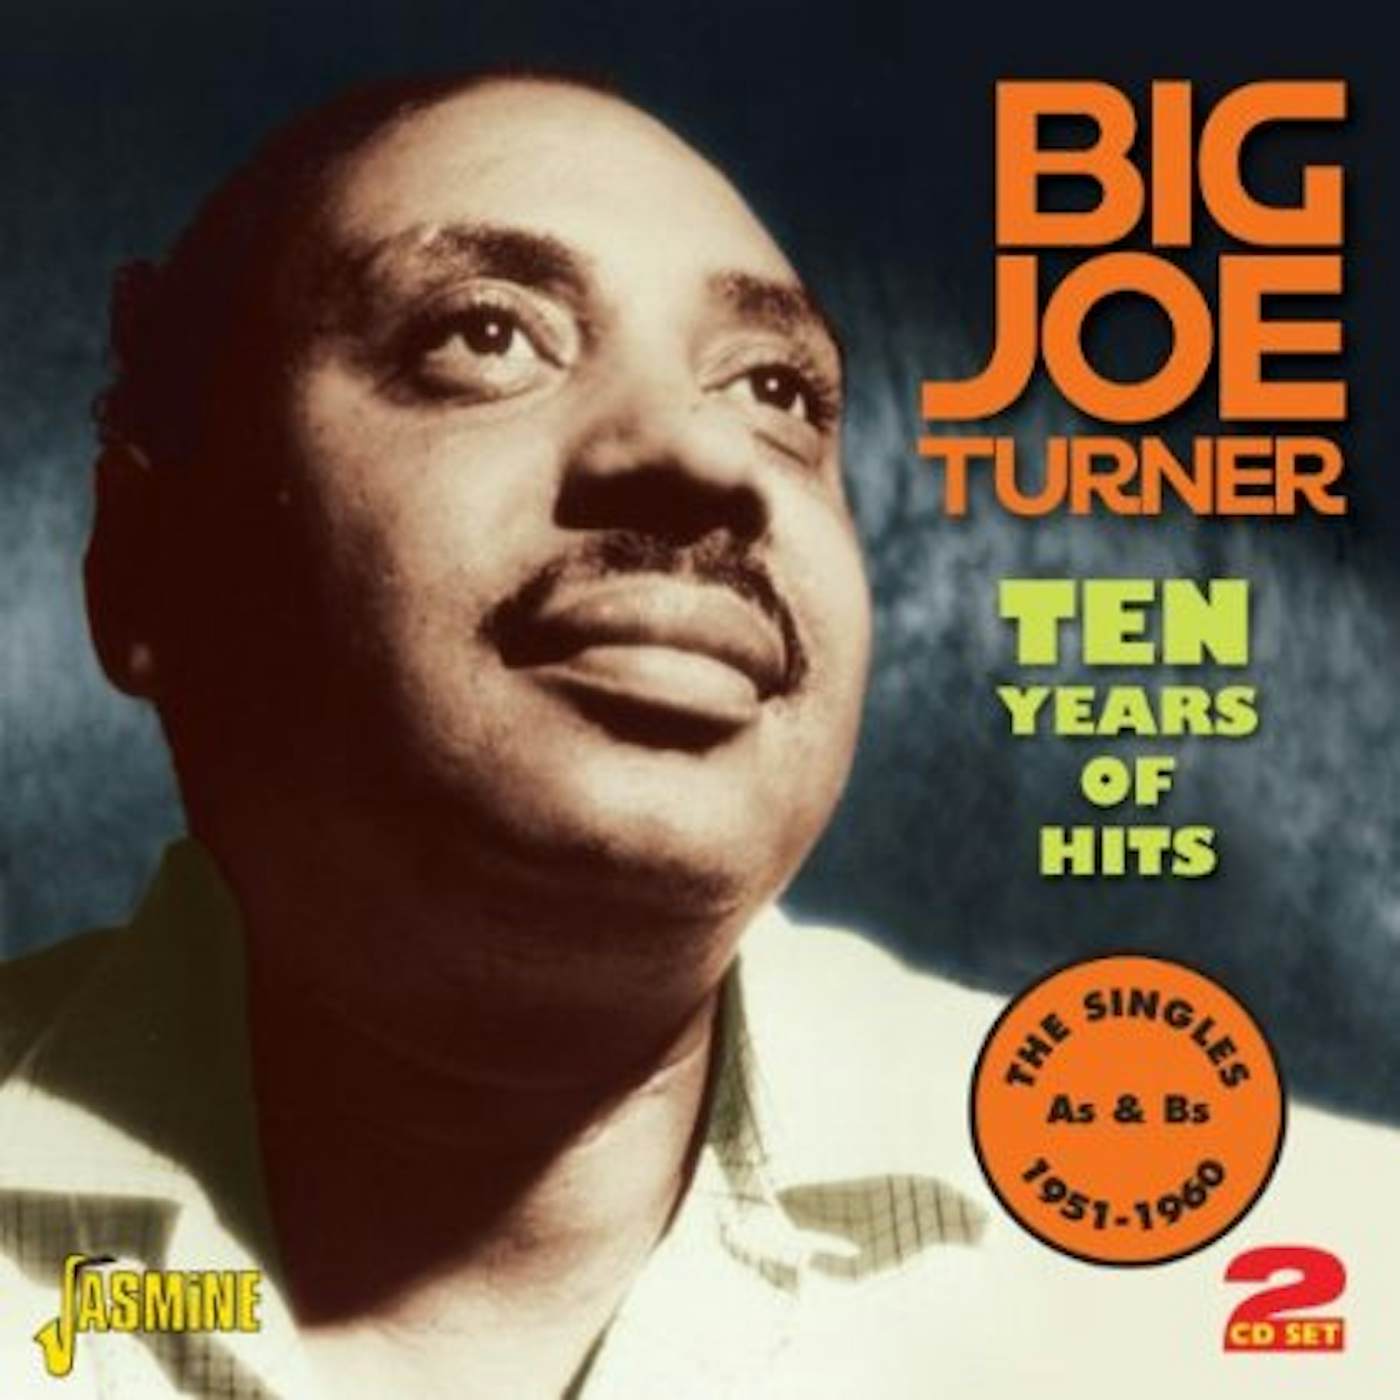 Big Joe Turner 10 YEARS OF HITS CD